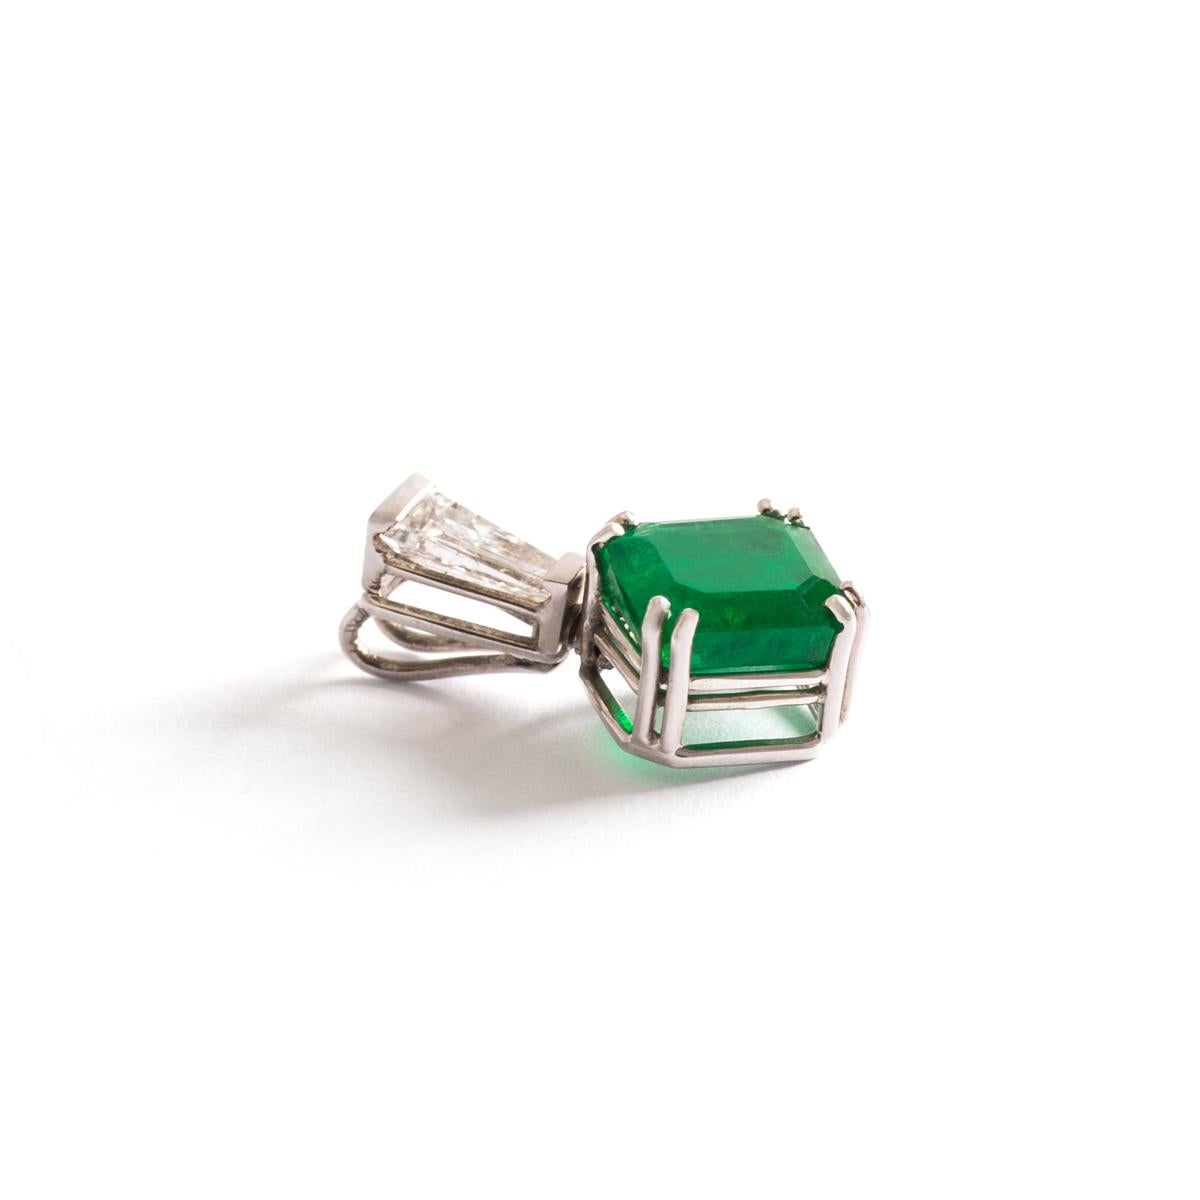 Emerald Diamond White Gold Pendant.
Emerald size: 6.09 x 5.41 millimeters.
Length: 1.50 centimeter.
Width: 0.90 centimeter.
Gross weight: 0.97 grams